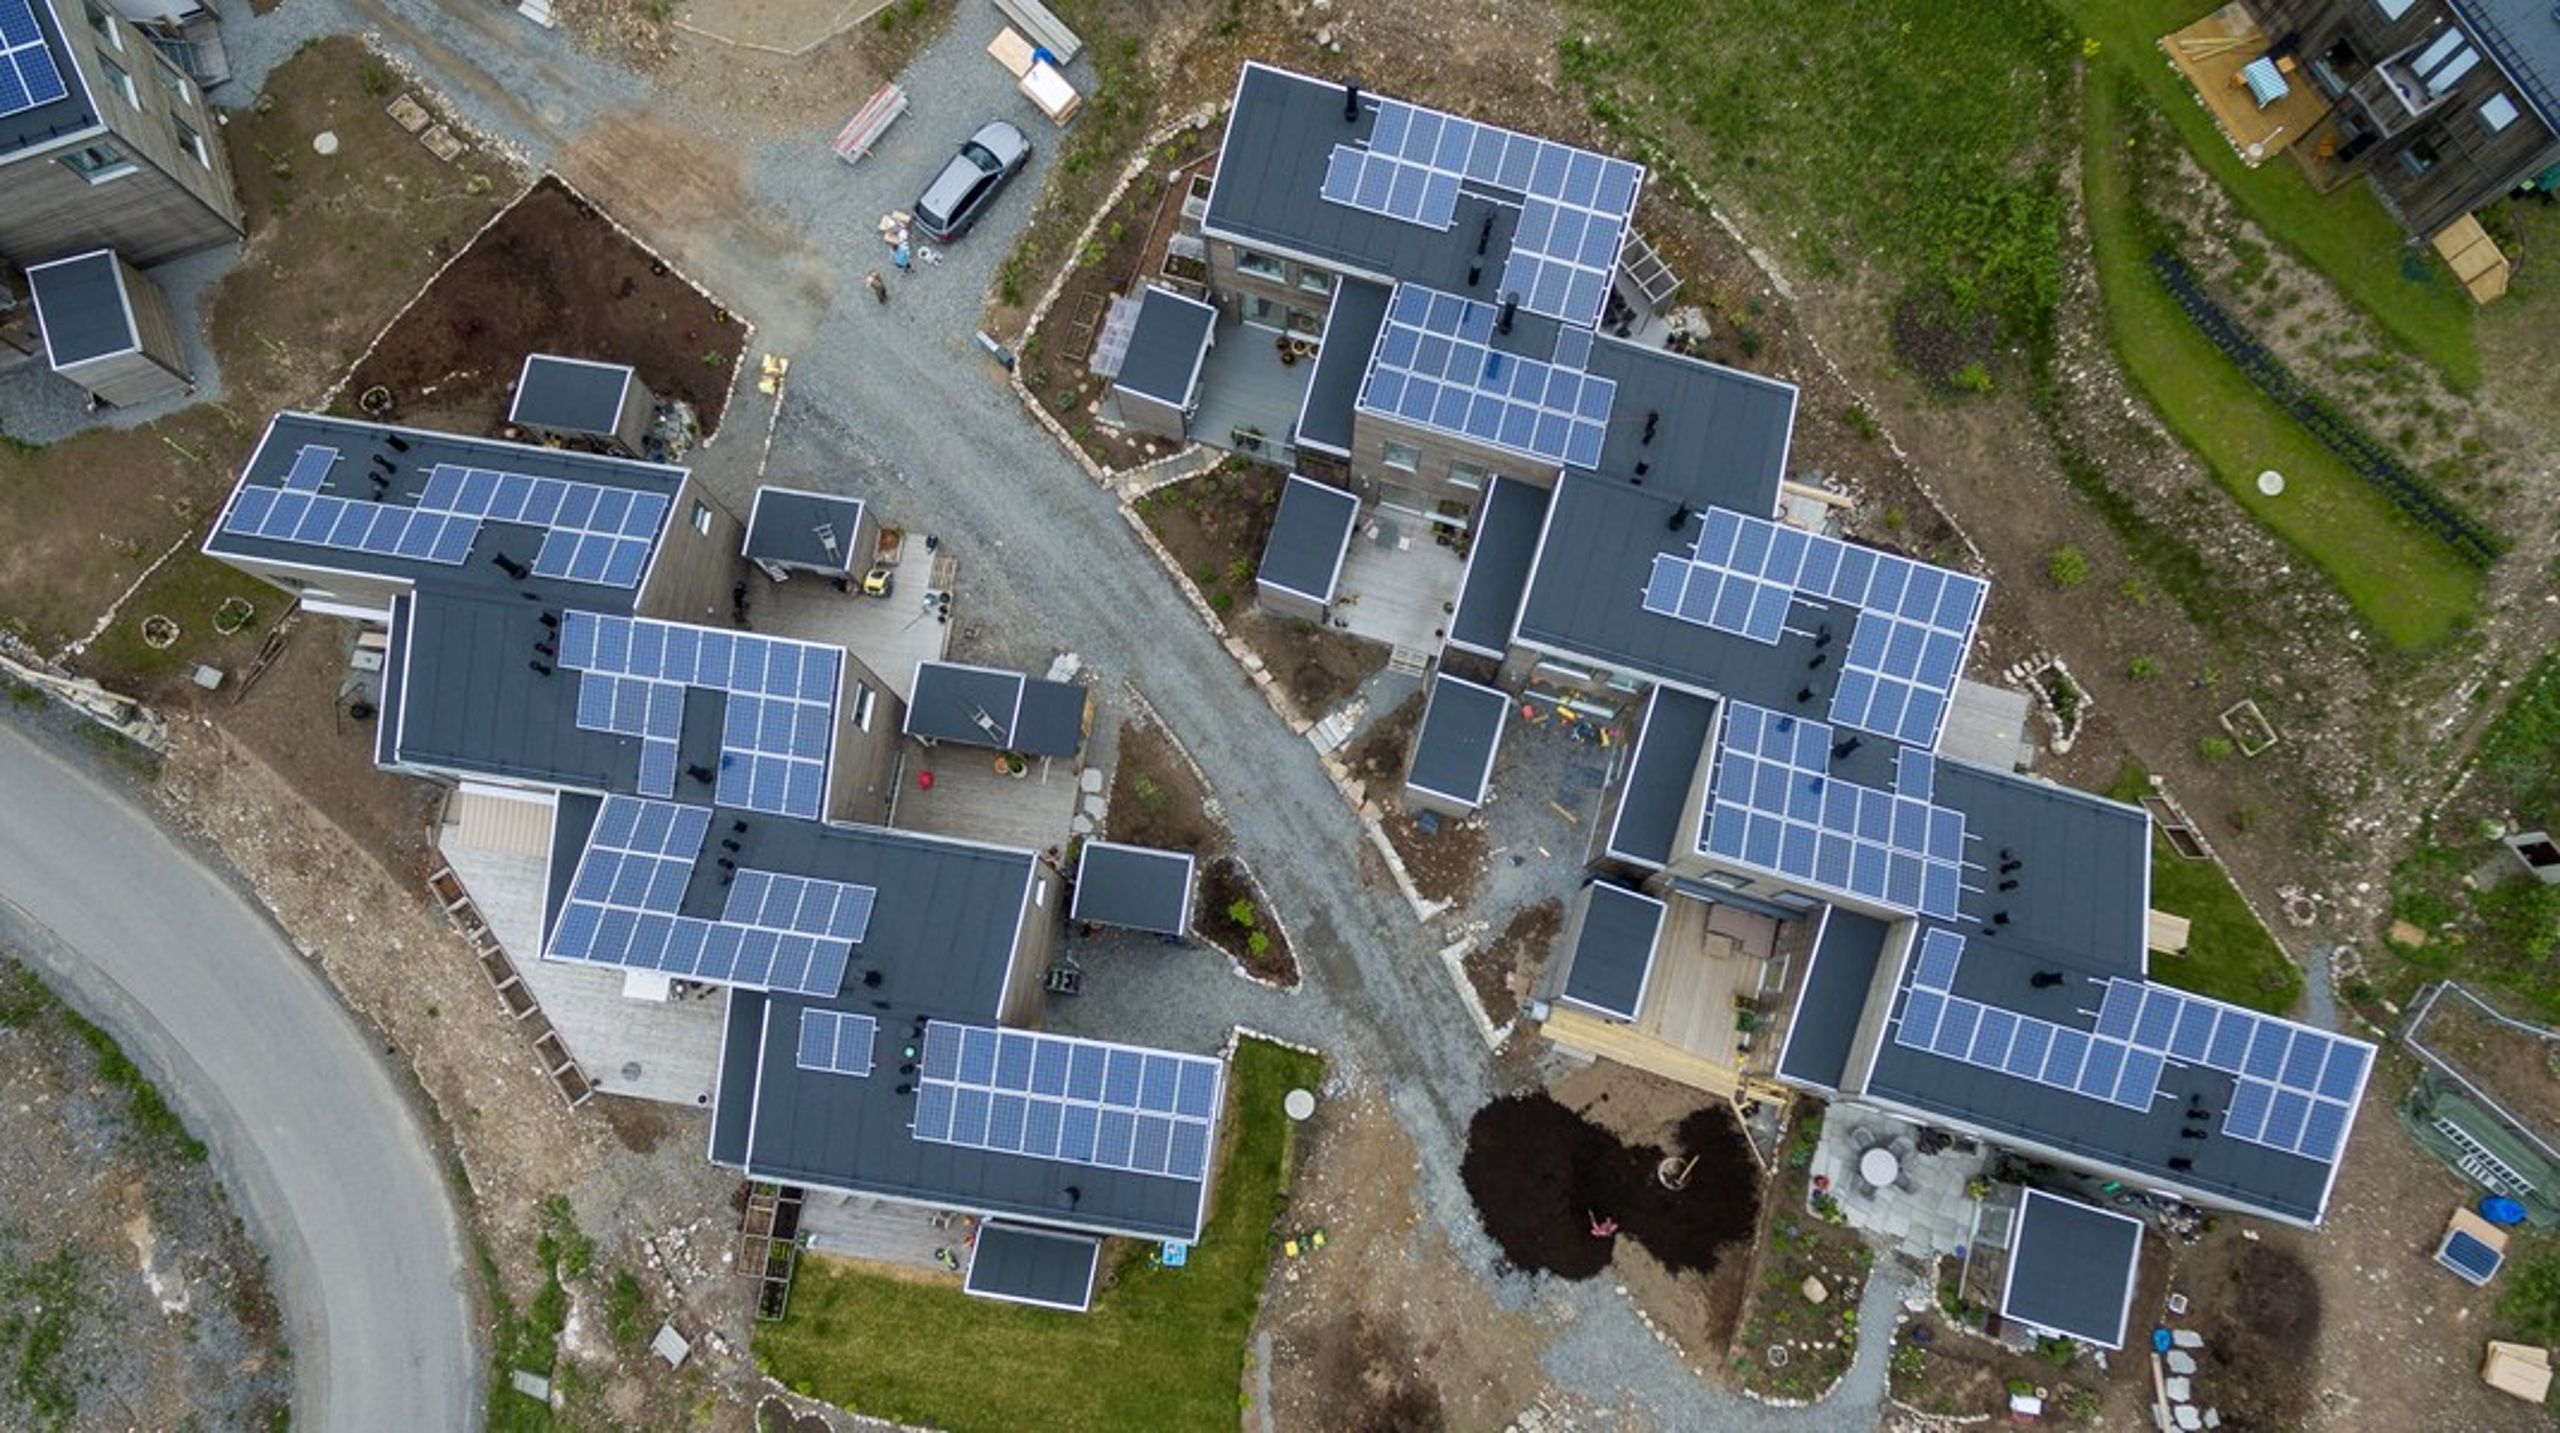 Potensialet for solenergi på tak i Norge er stort, særlig på Sør- og Østlandet, ifølge en rapport fra Multiconsult. Husene i økolandsbyen i Hurdal er blant dem som allerede har installert solceller.